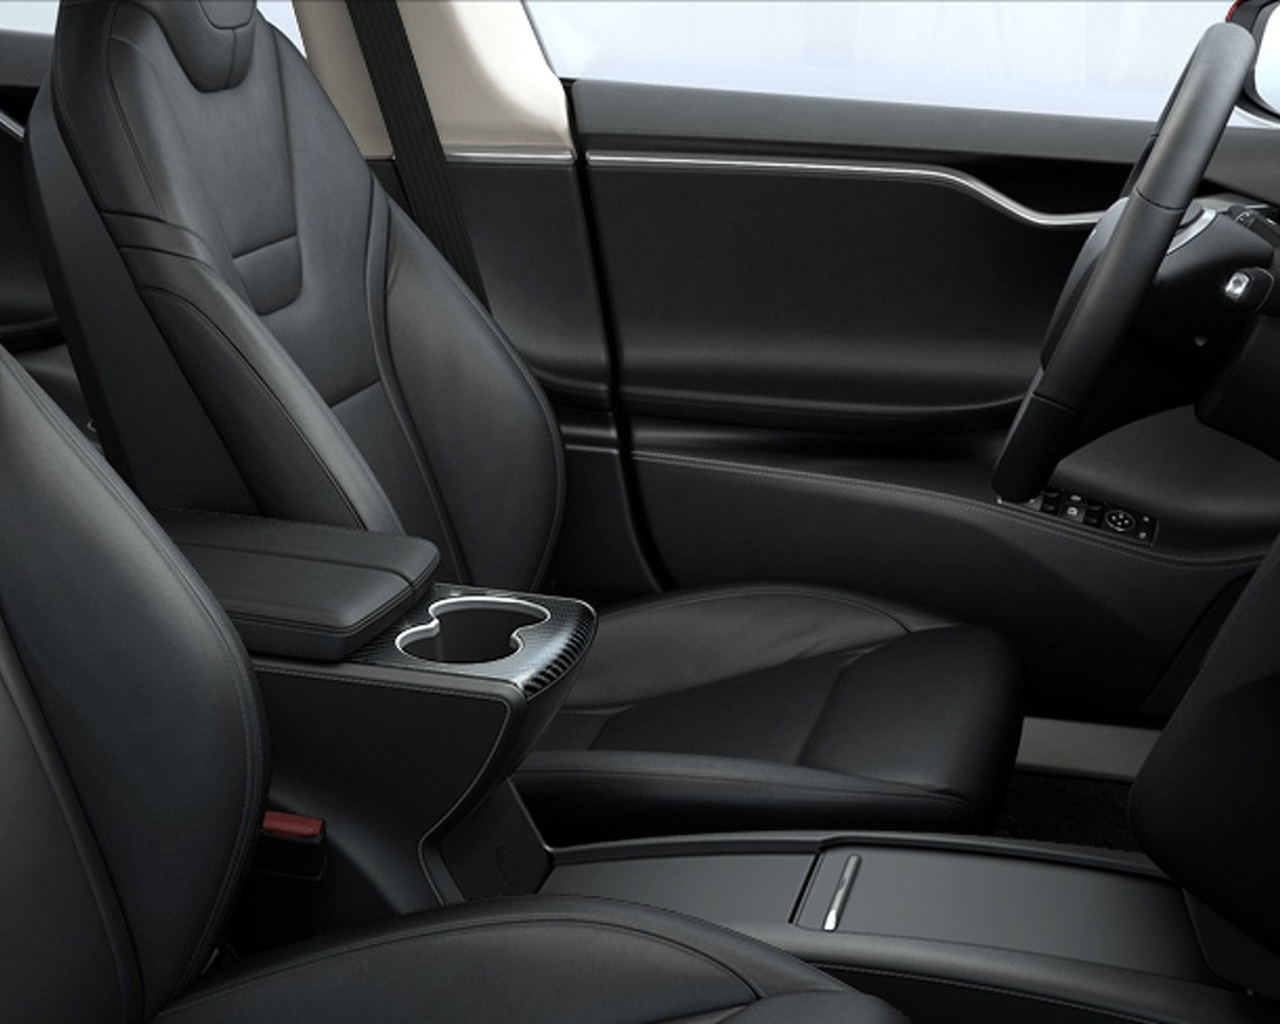 Black leather interior electric Tesla Model S